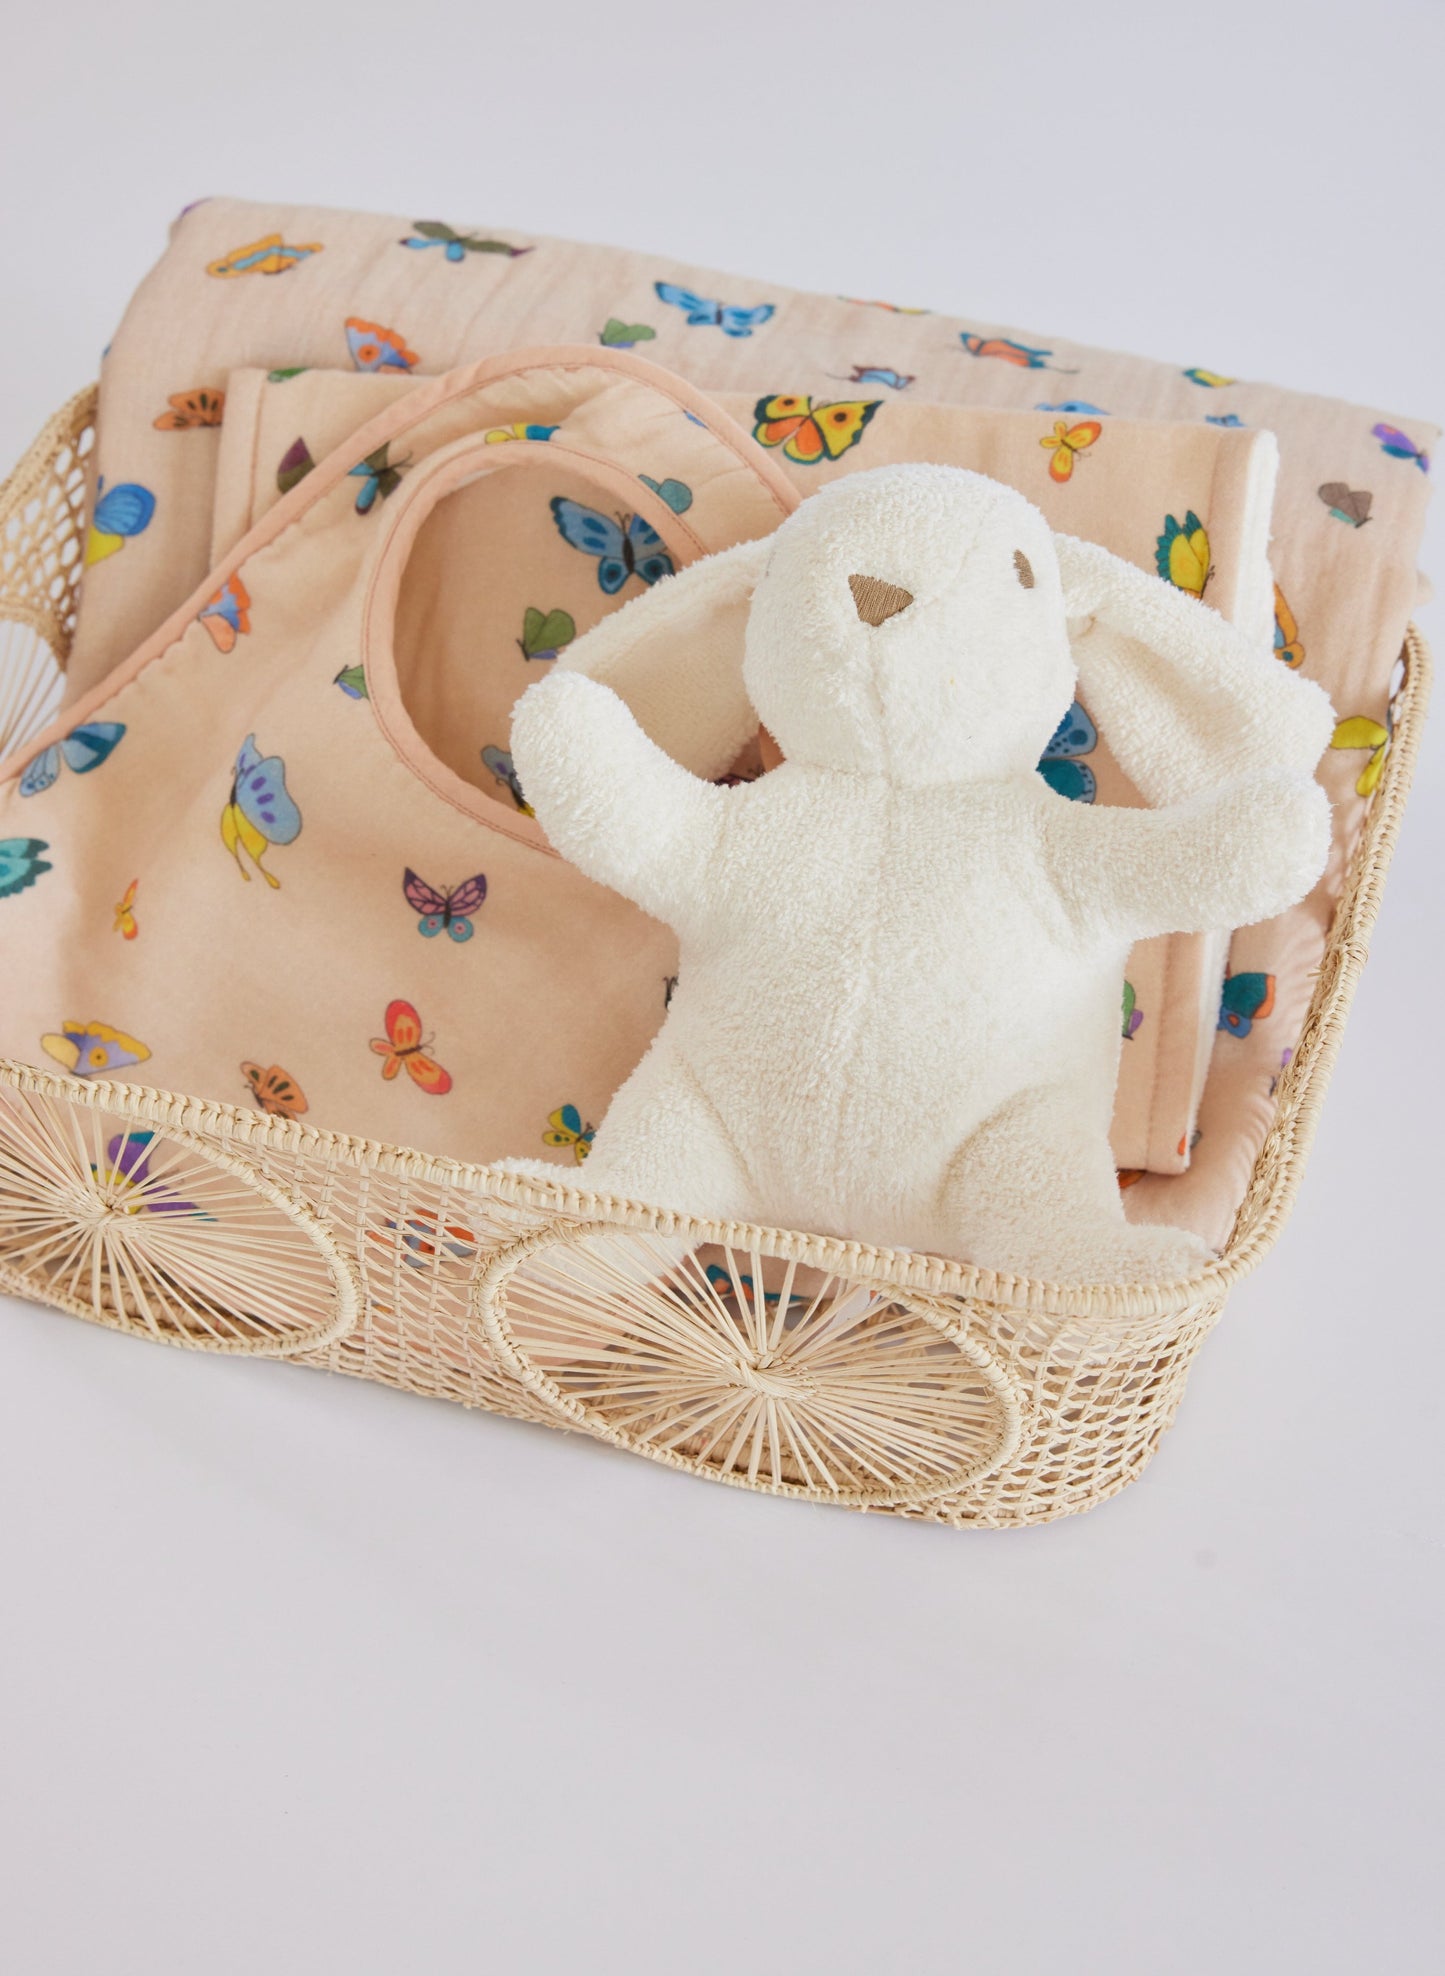 Blush Peach Madame Butterfly Shawl Blanket, Bib, Burp Cloth and Bunny Gift Basket